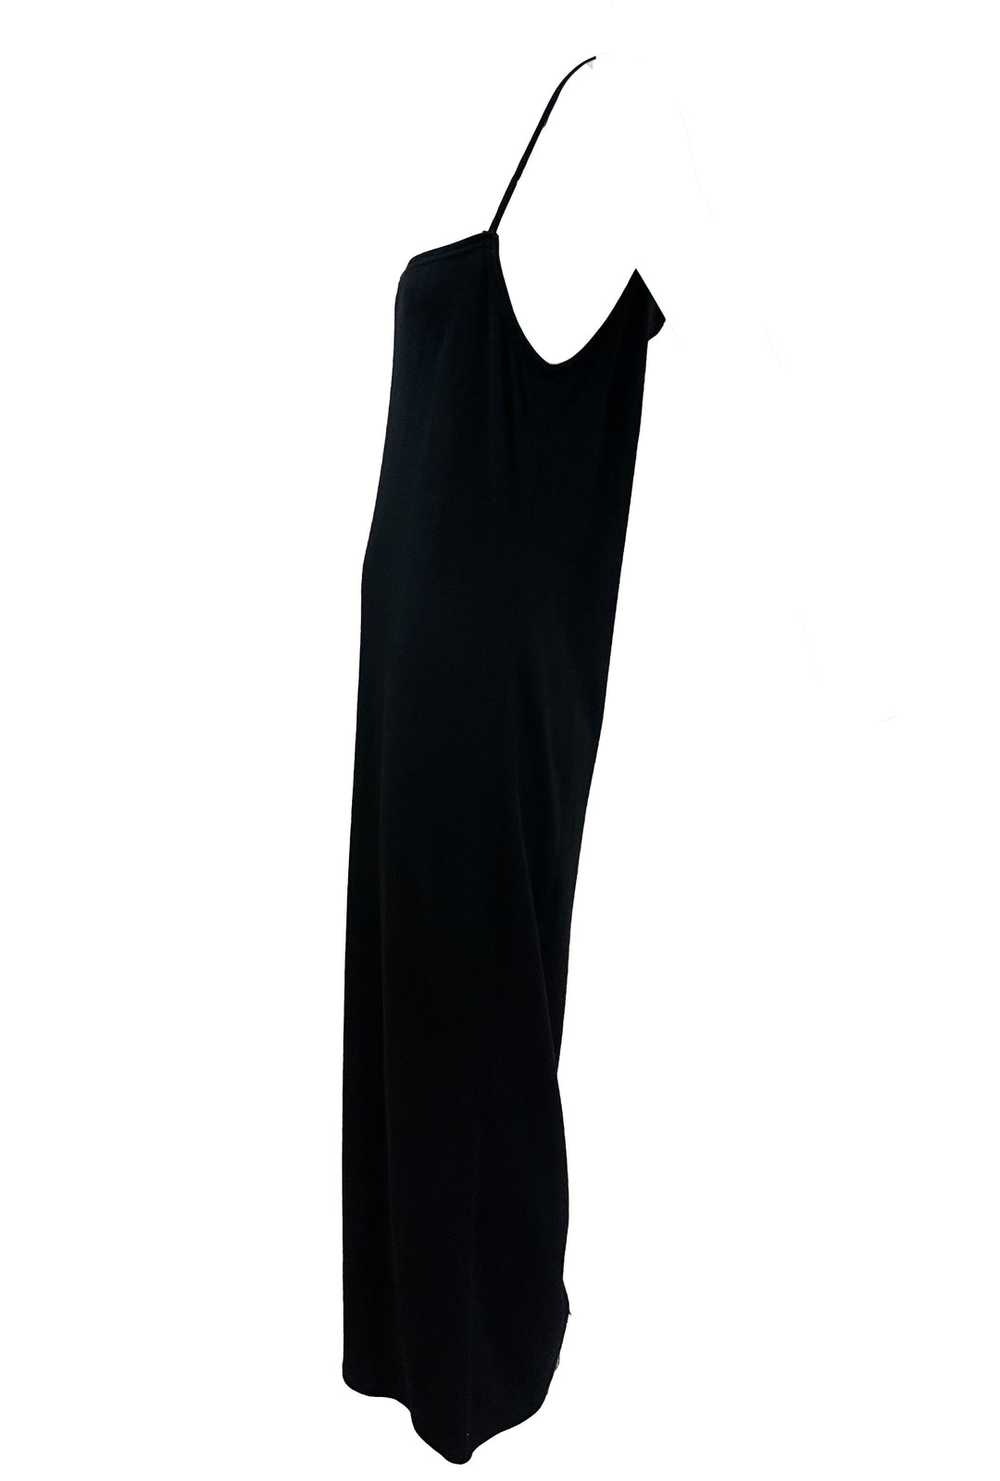 Krizia 90s Black Cashmere Slip Dress - image 2